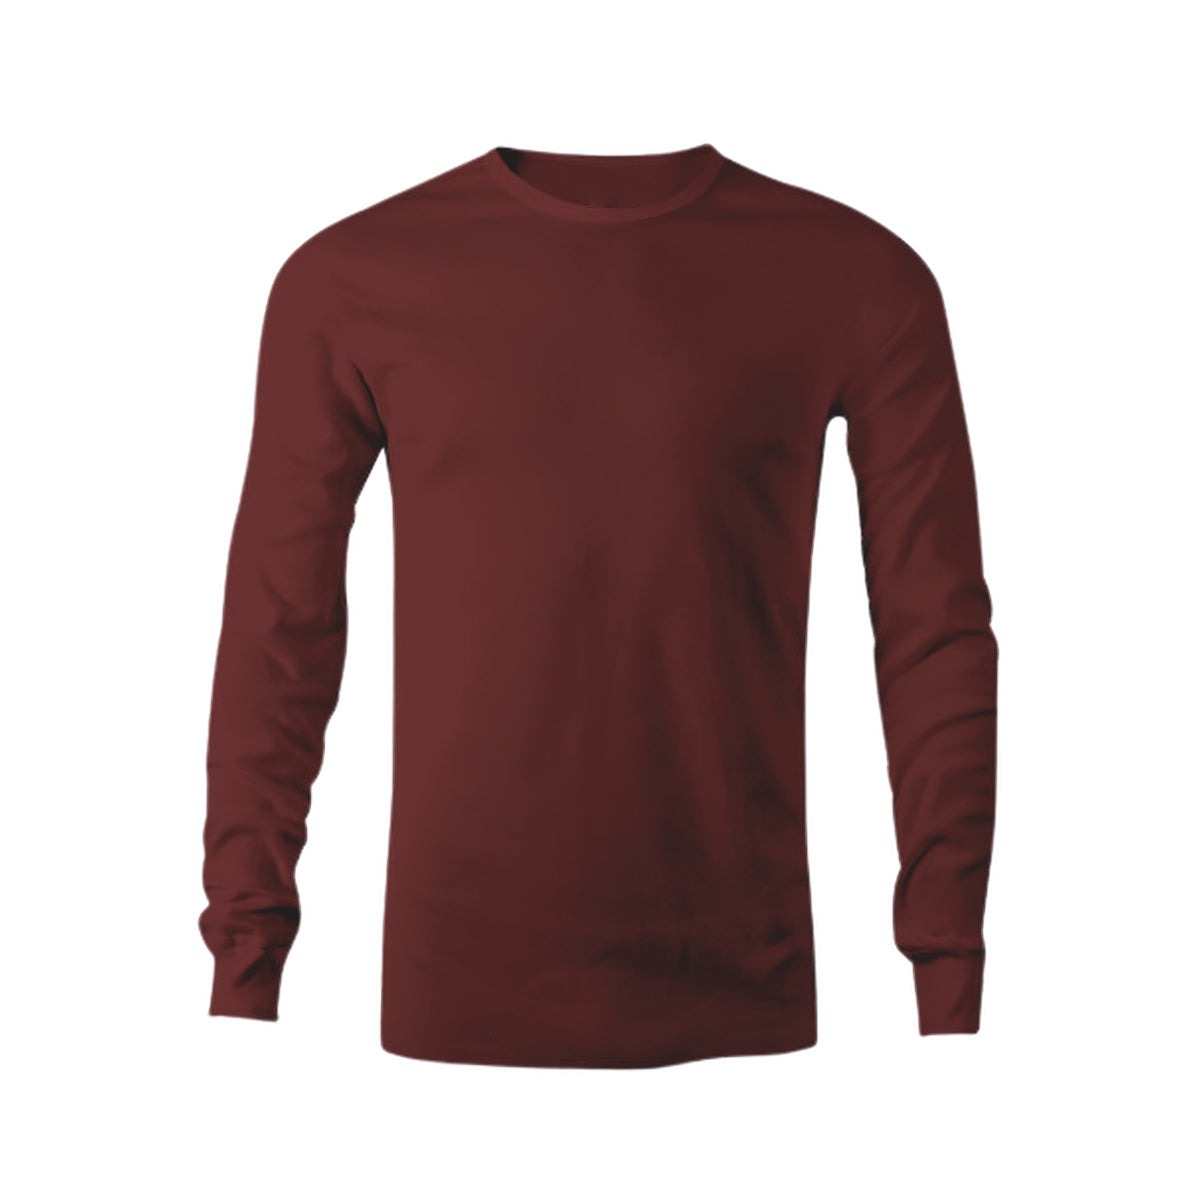 HercShirt 3.0 - The World's Cleanest Long Sleeve Shirt